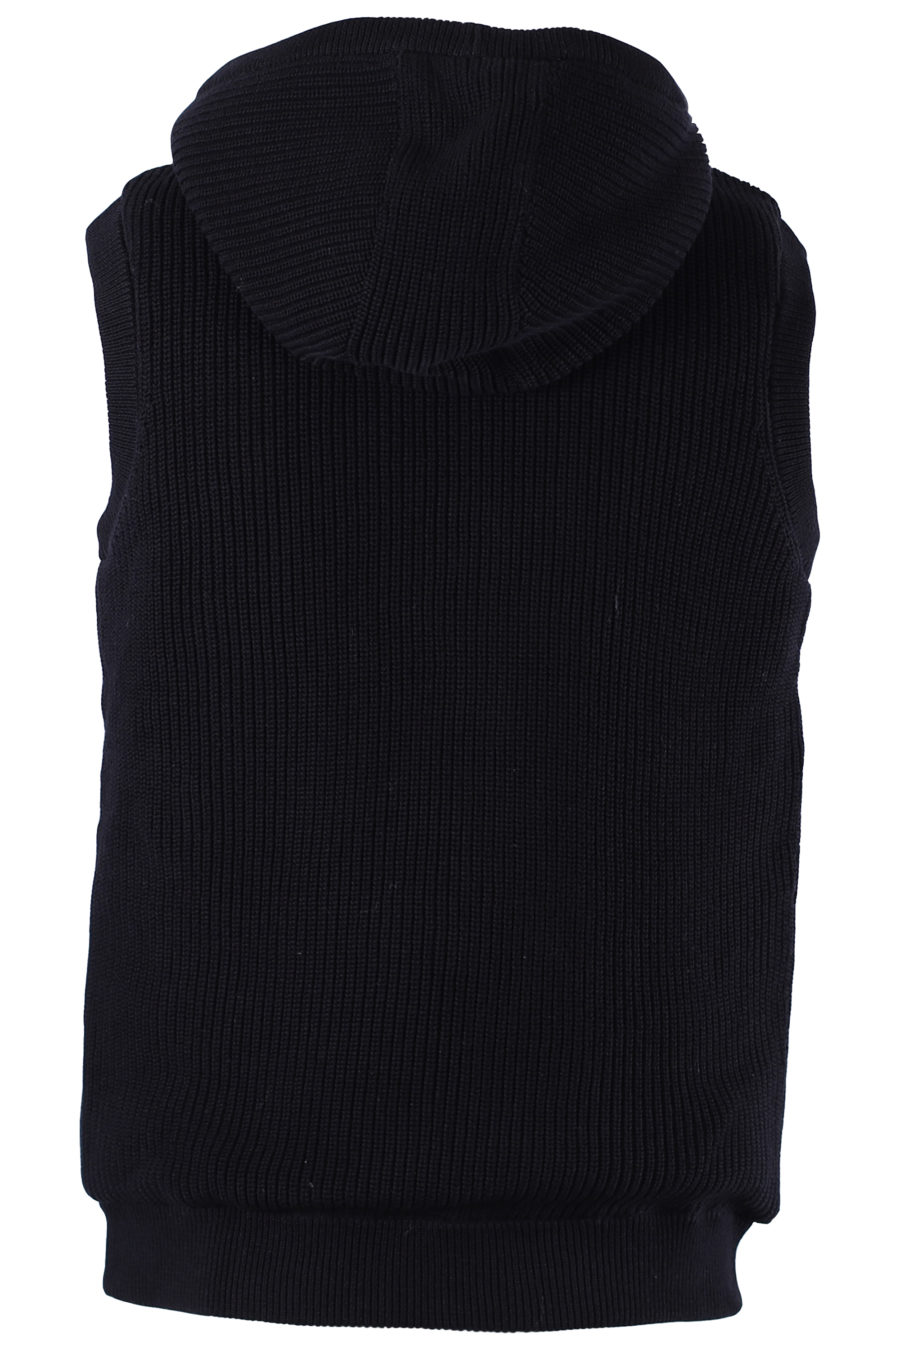 Reversible black knitted waistcoat - IMG 0551